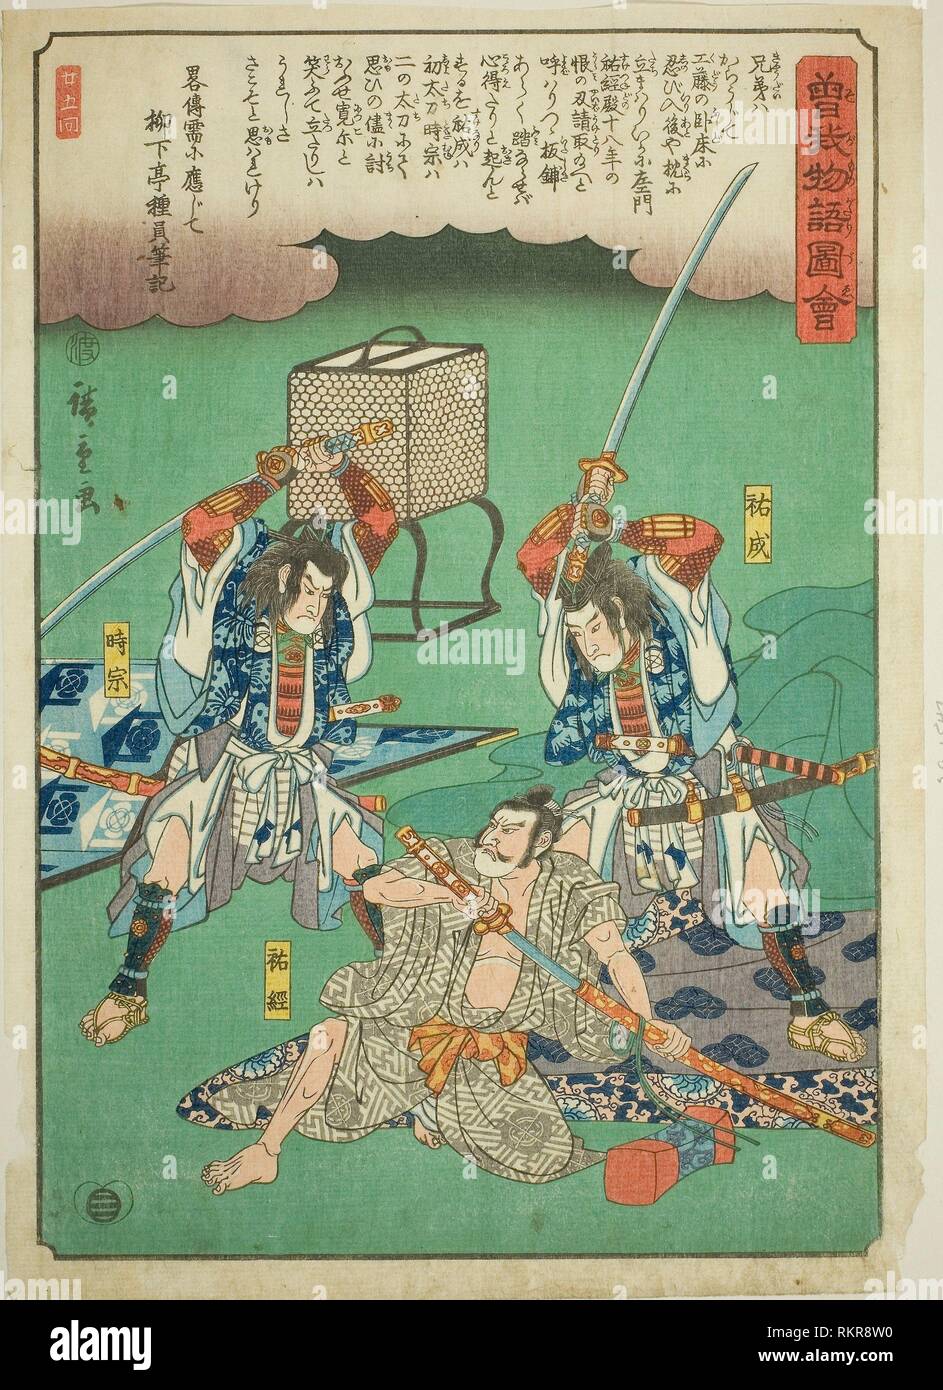 Sukenari (Soga no Juro) and Tokimune (Soga no Goro) assasinating Suketsune,  from the series Illustrated Tale of the Soga Brothers (Soga monogatari  Stock Photo - Alamy